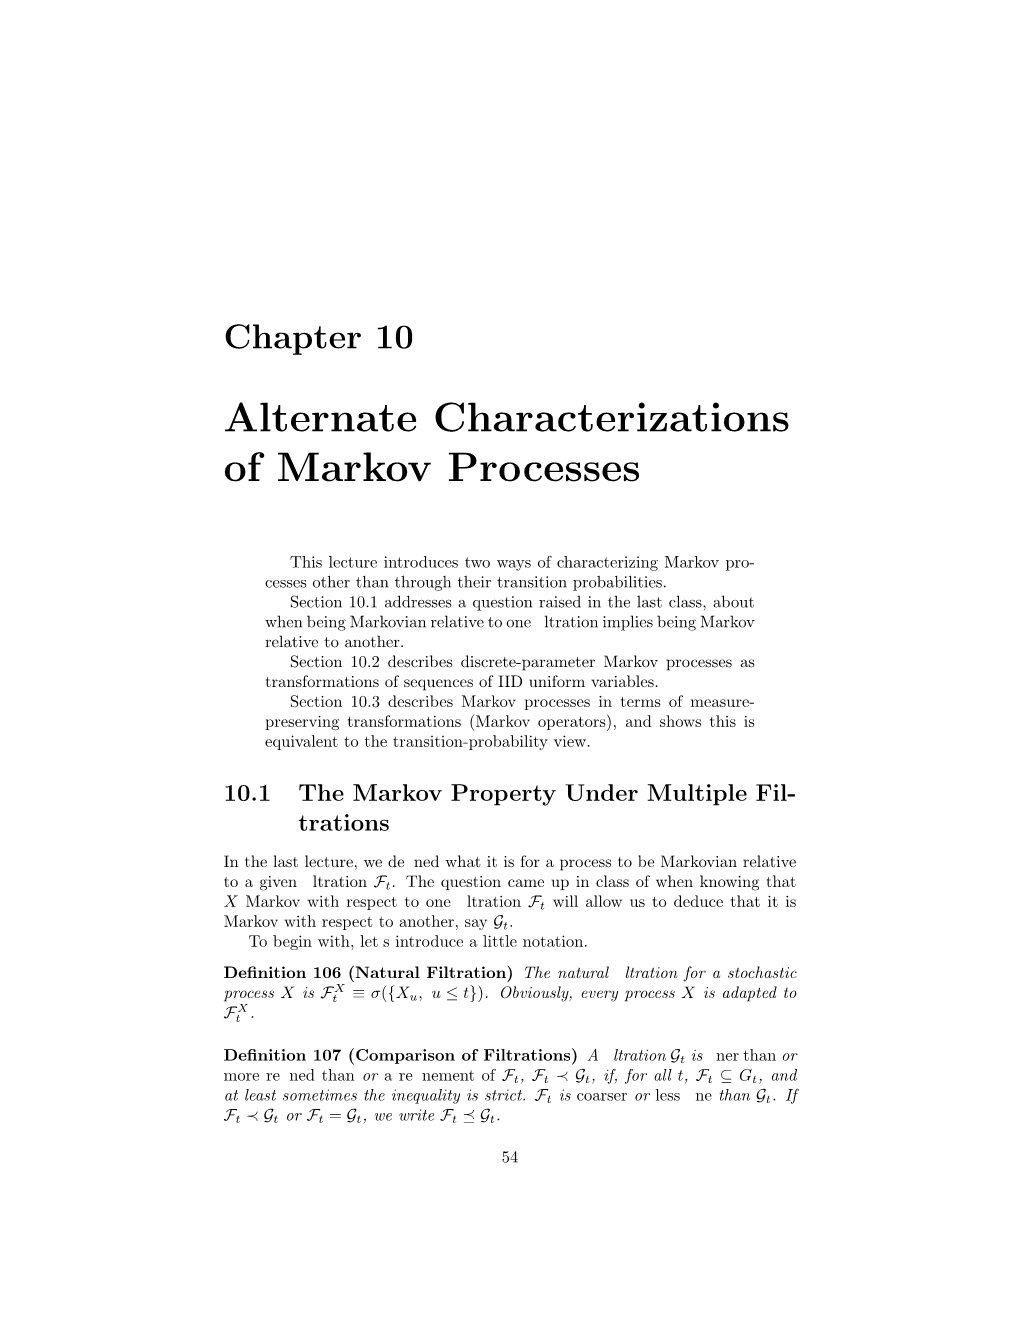 Alternate Characterizations of Markov Processes